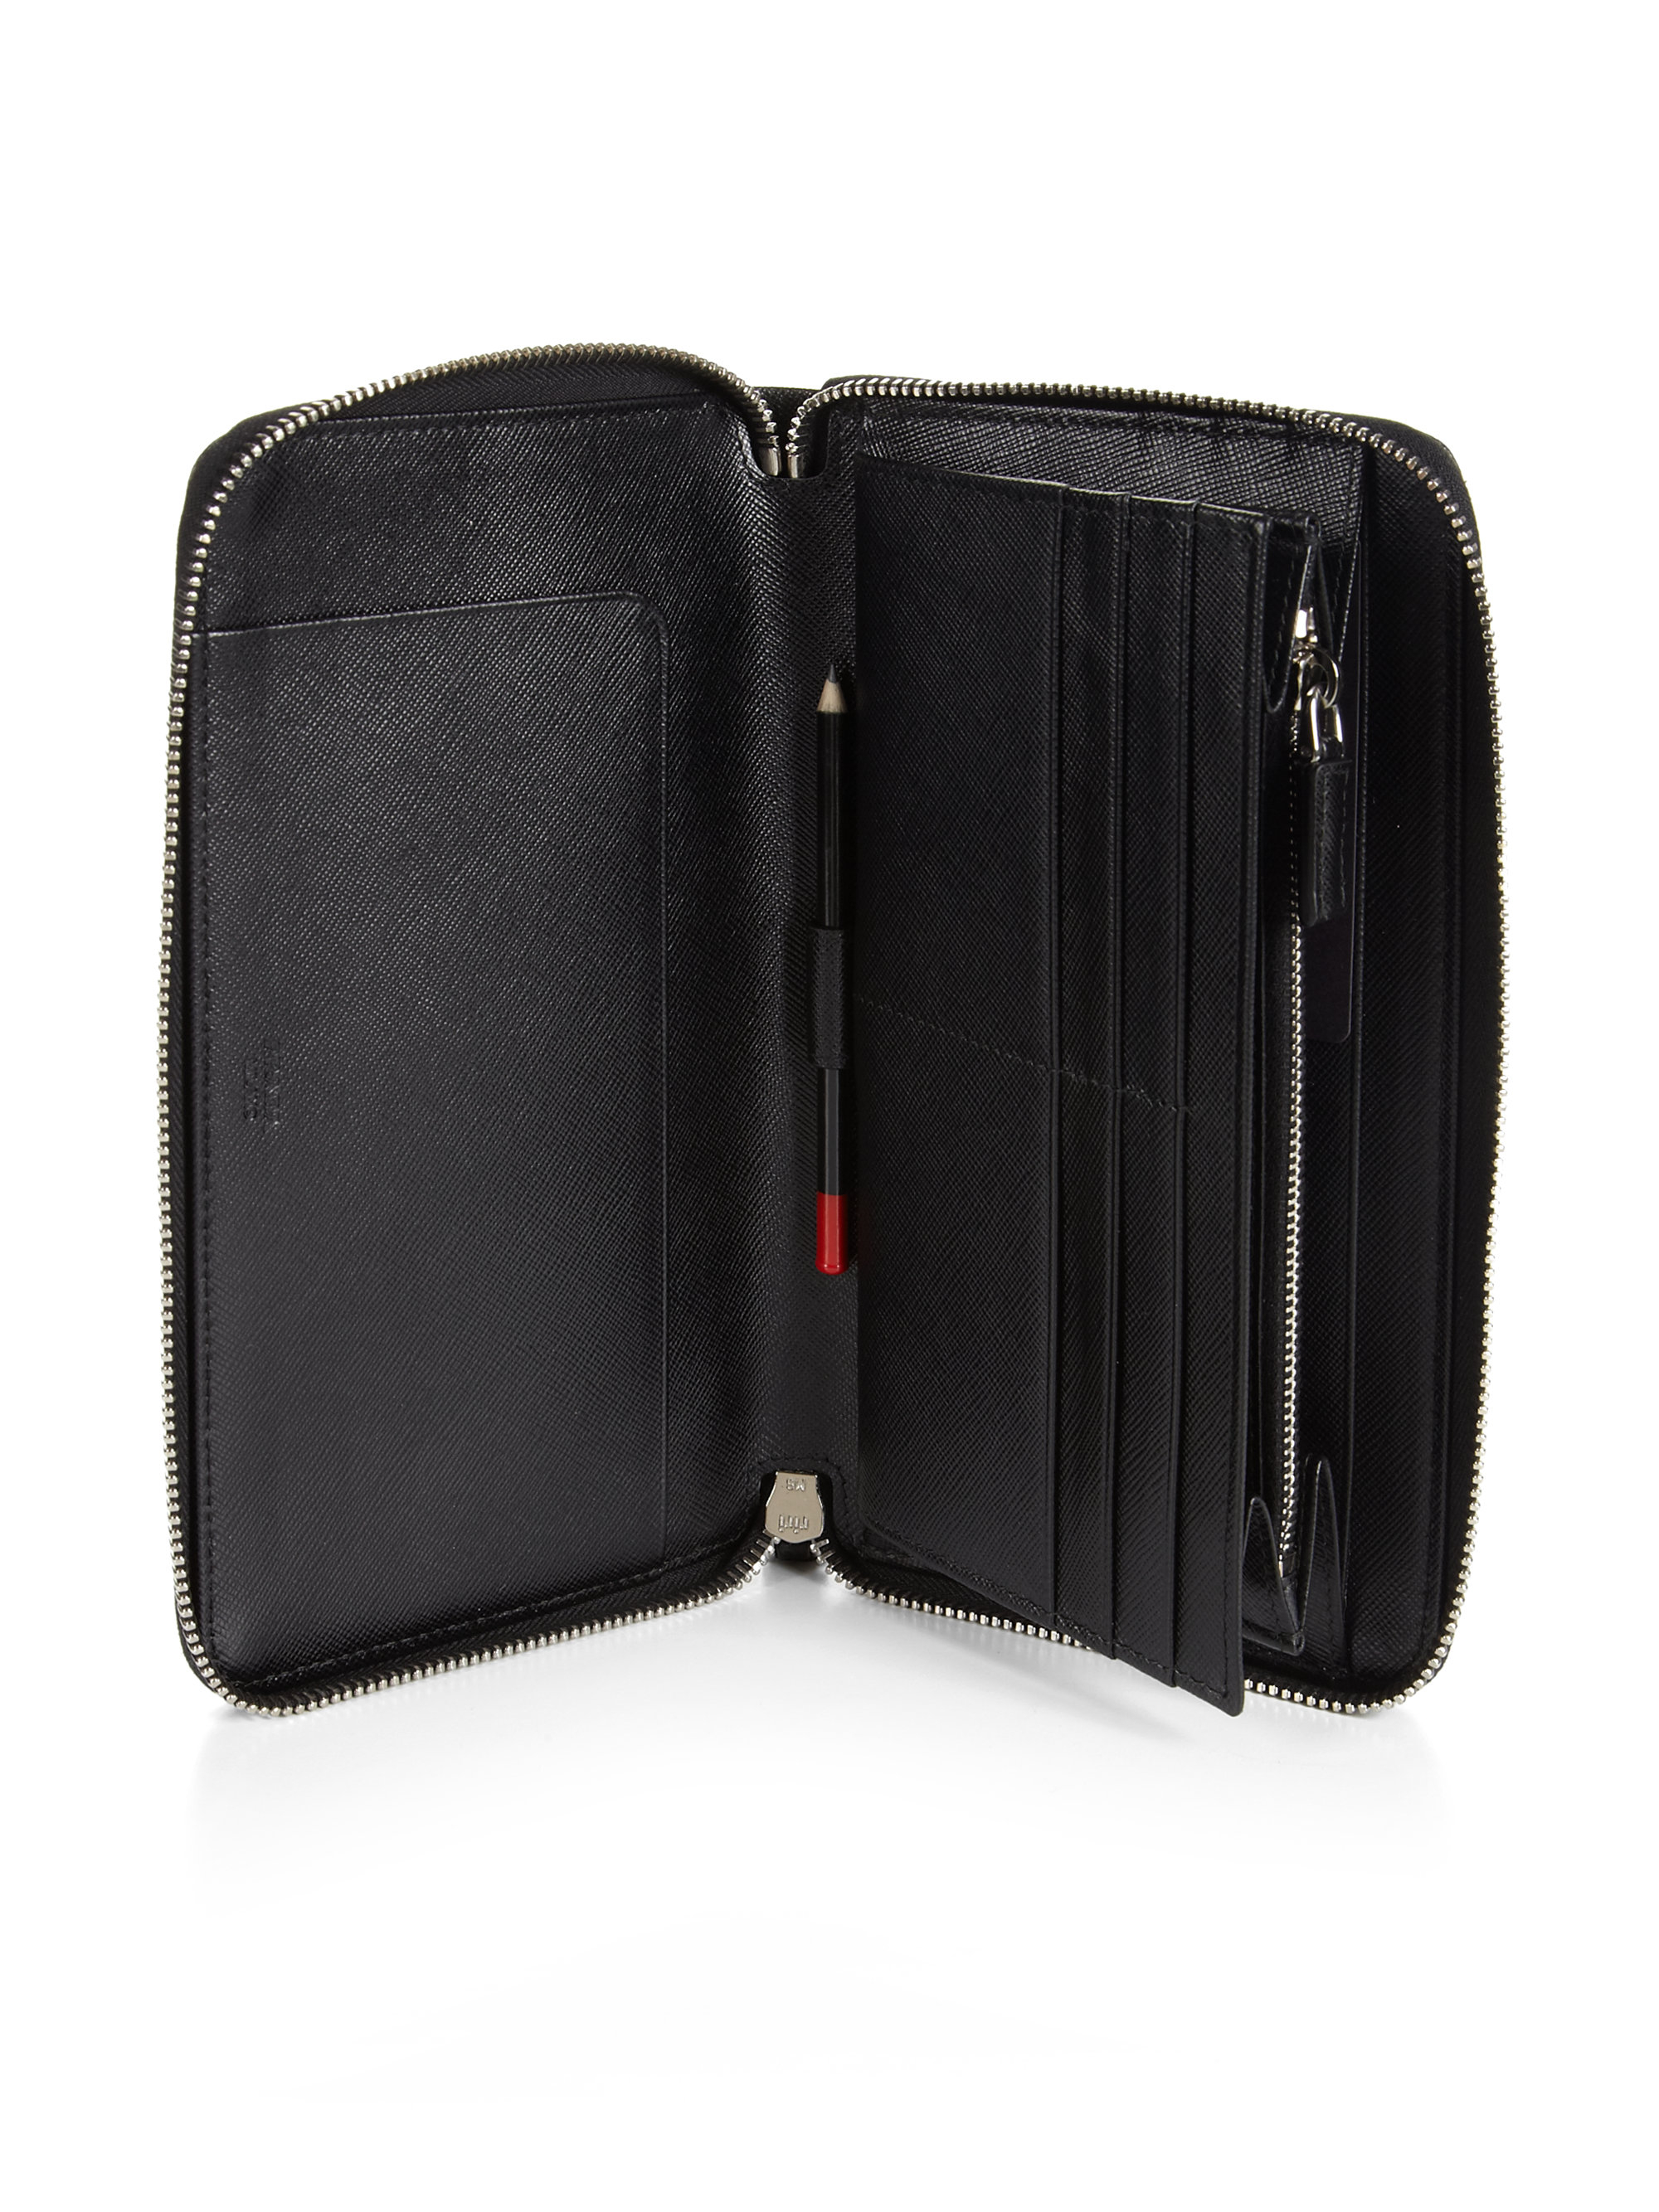 Lyst - Prada Saffiano Zip Travel Wallet in Black for Men